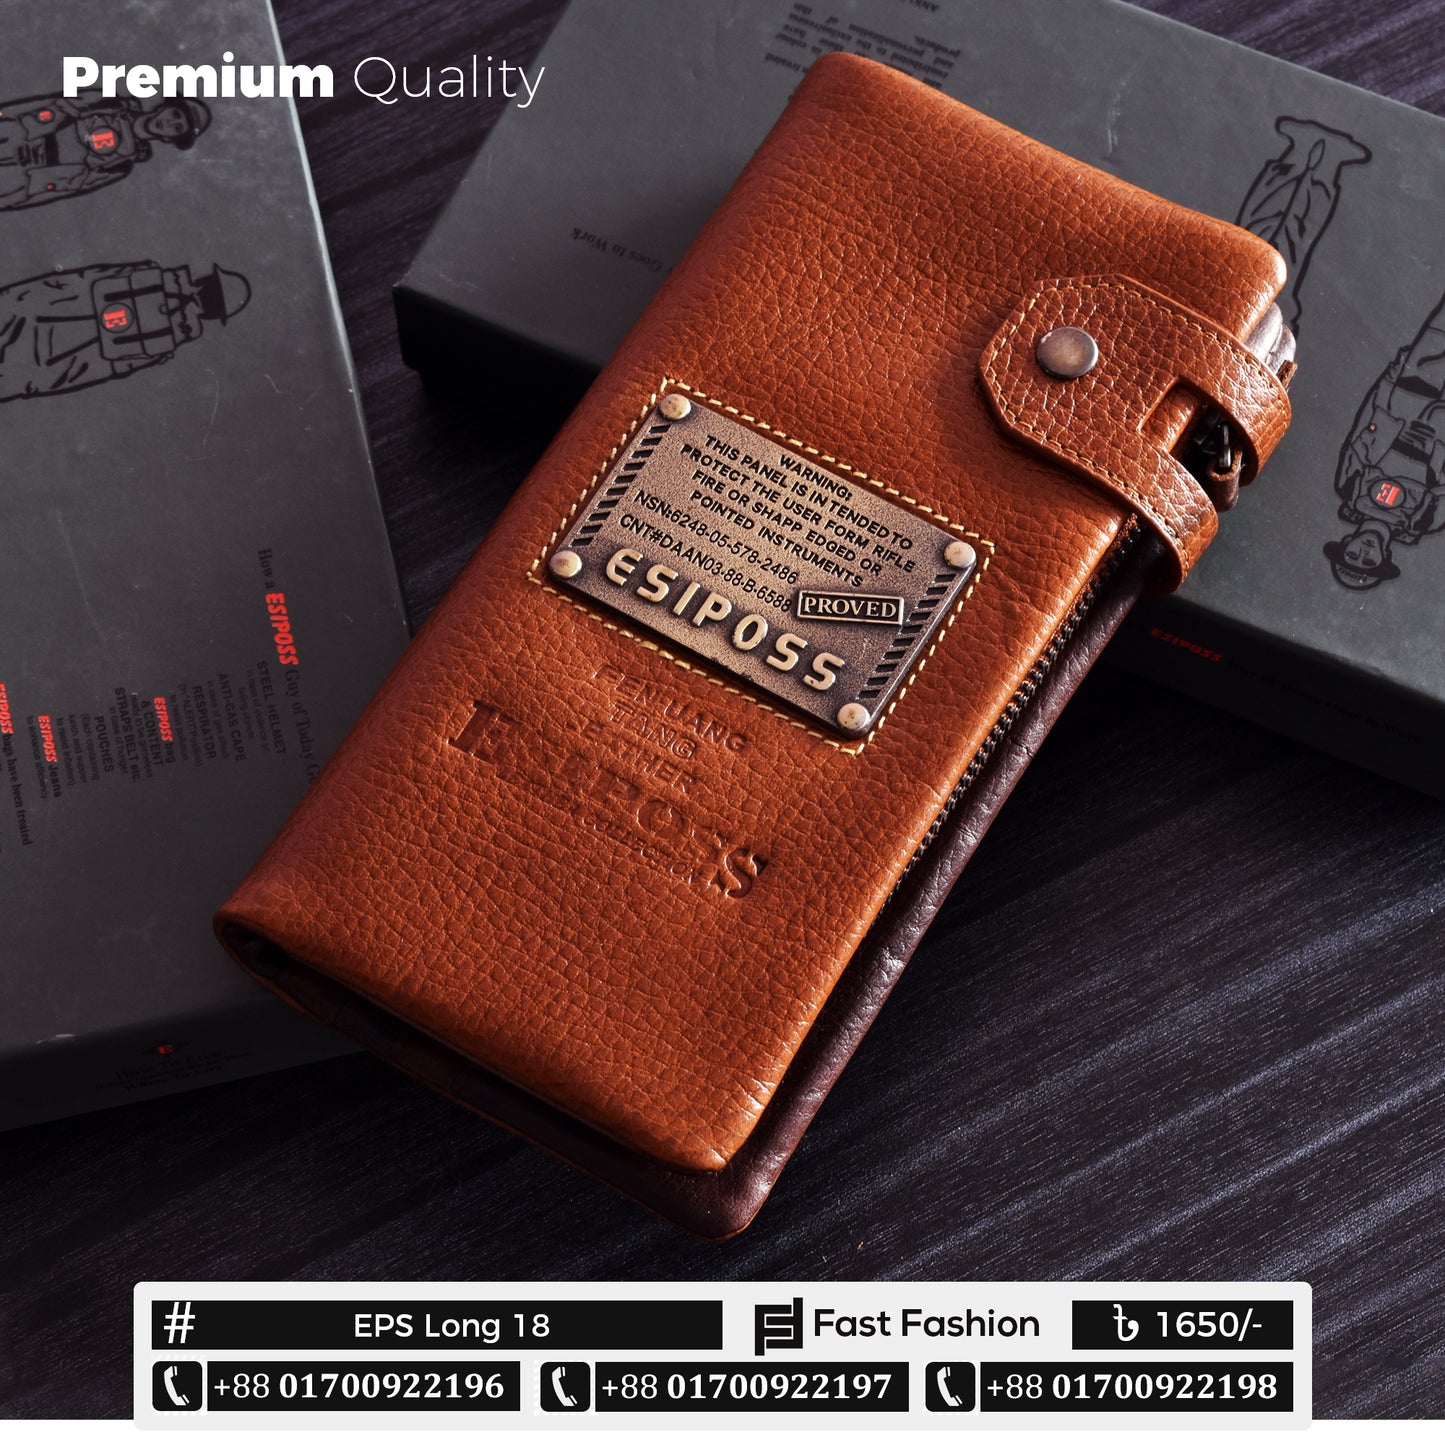 Original Esiposs Leather Long Wallet | Mobile Size Wallet | EPS Long 18